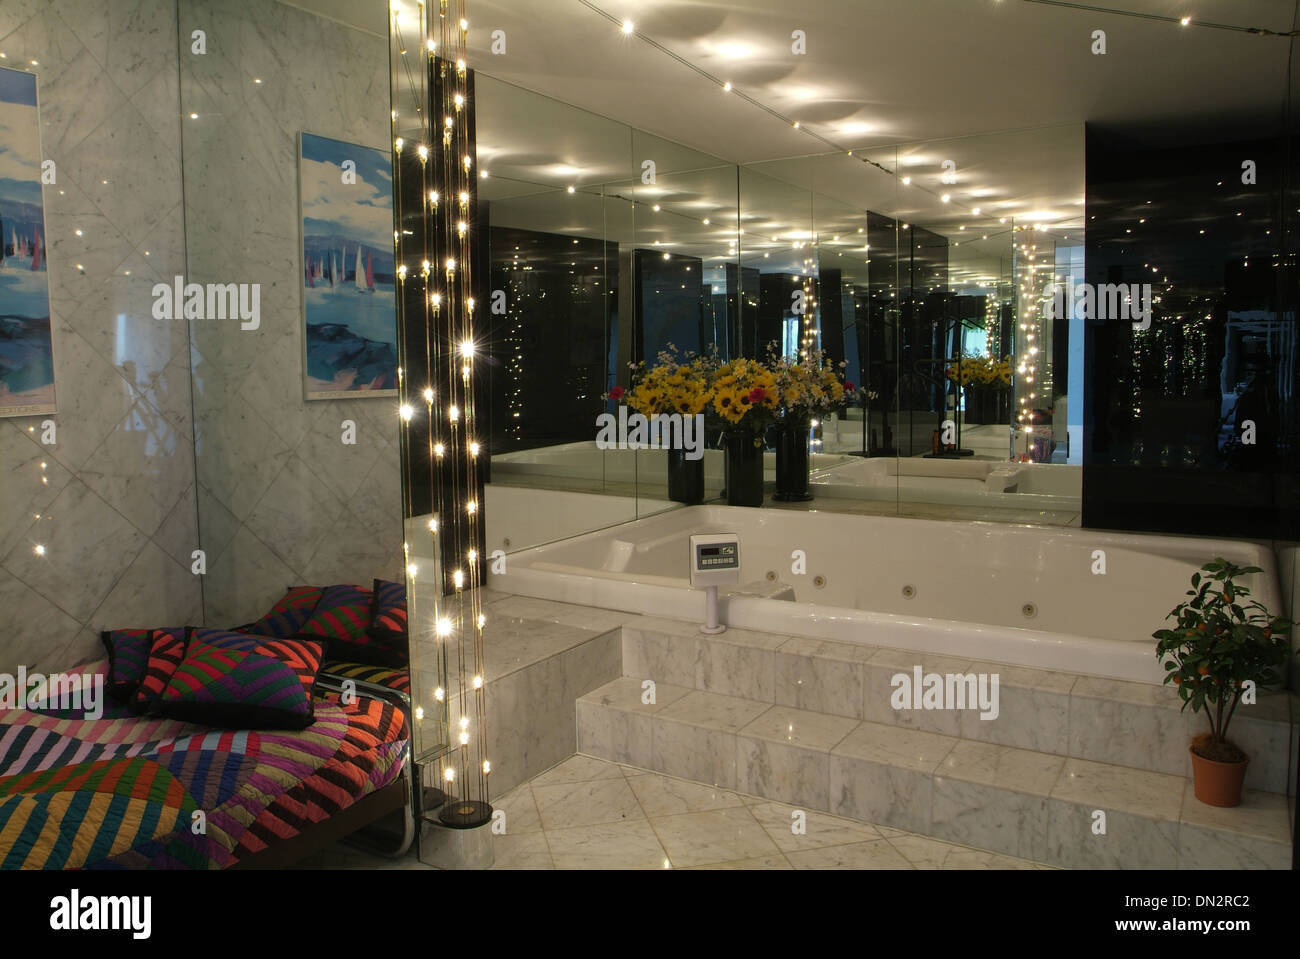 Luxurios bathroom with a jacuzzi Stock Photo